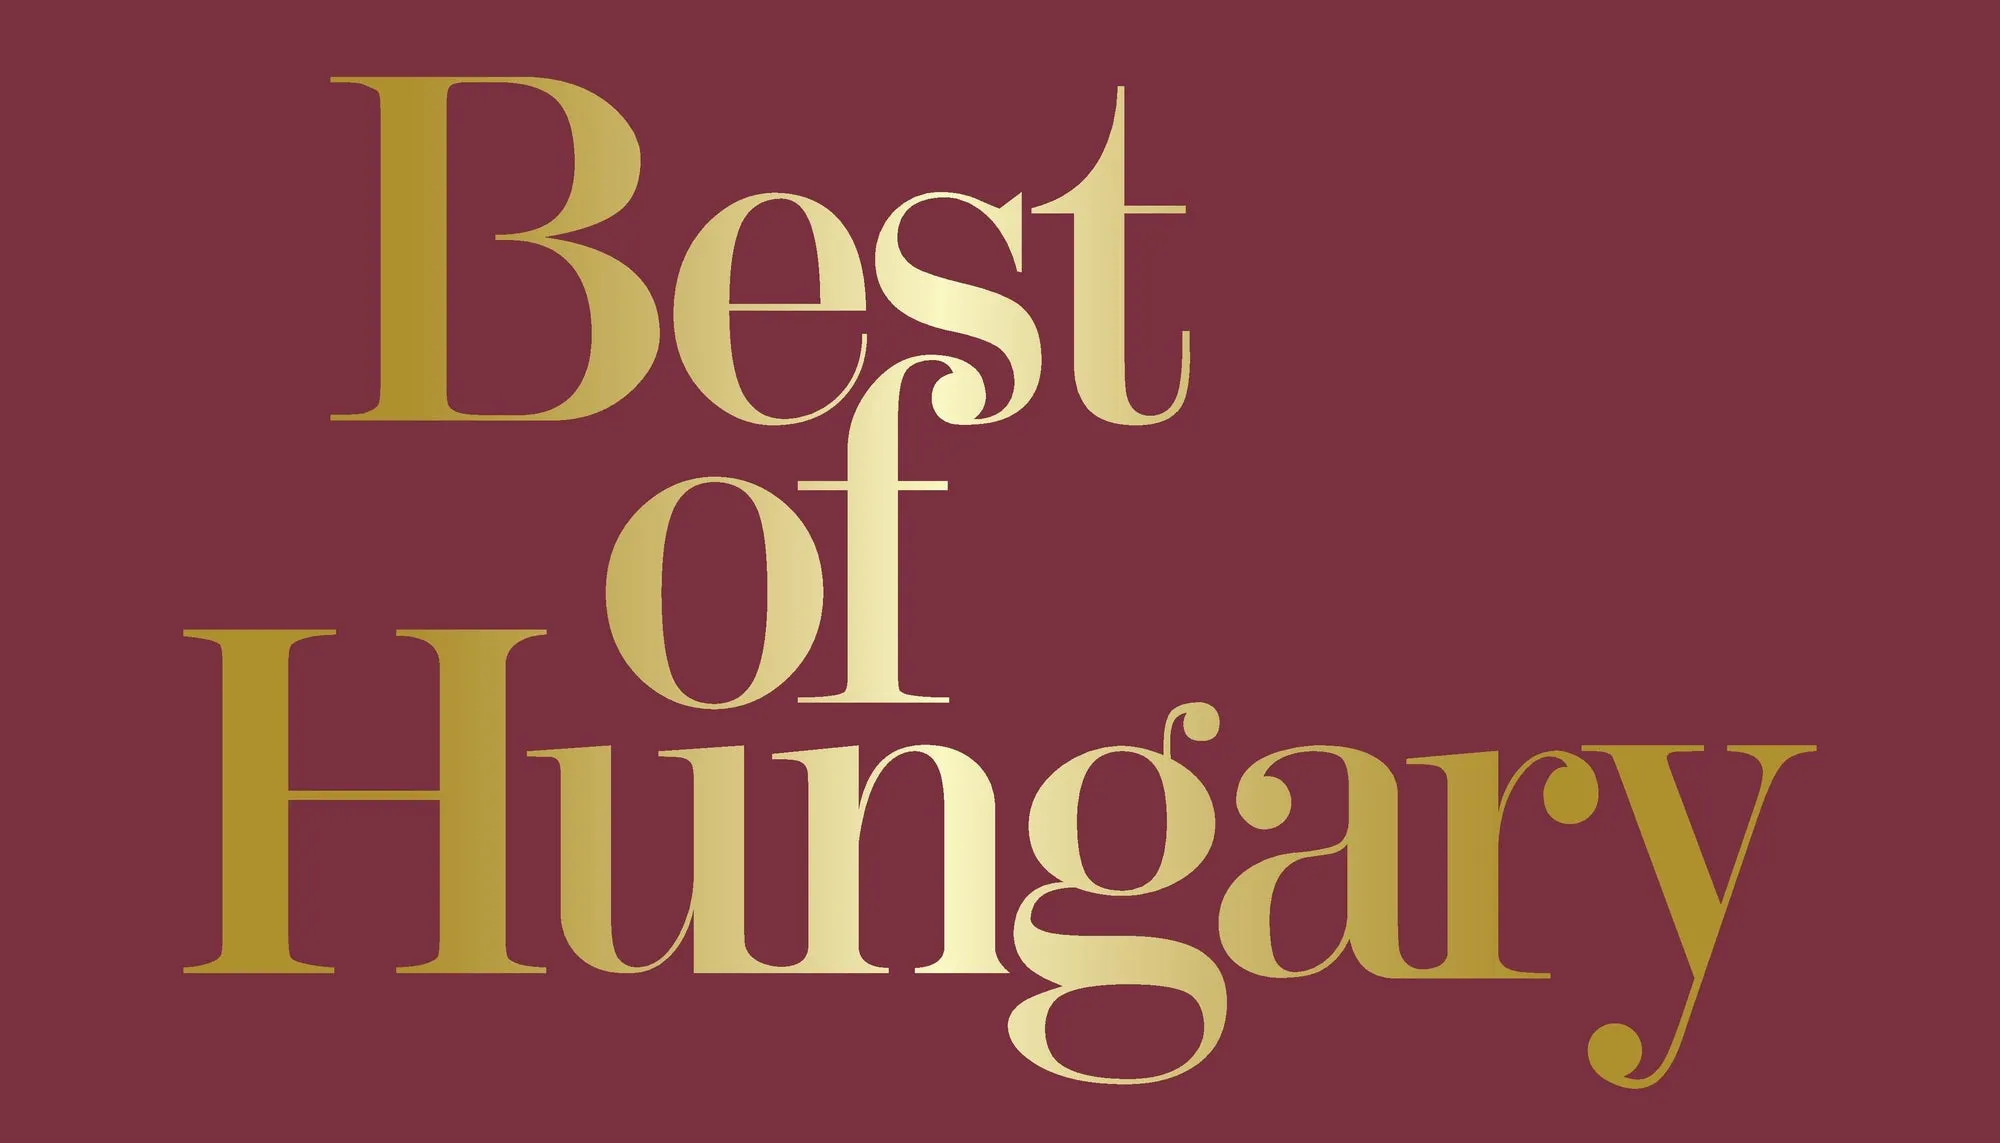 Best Of Hungary